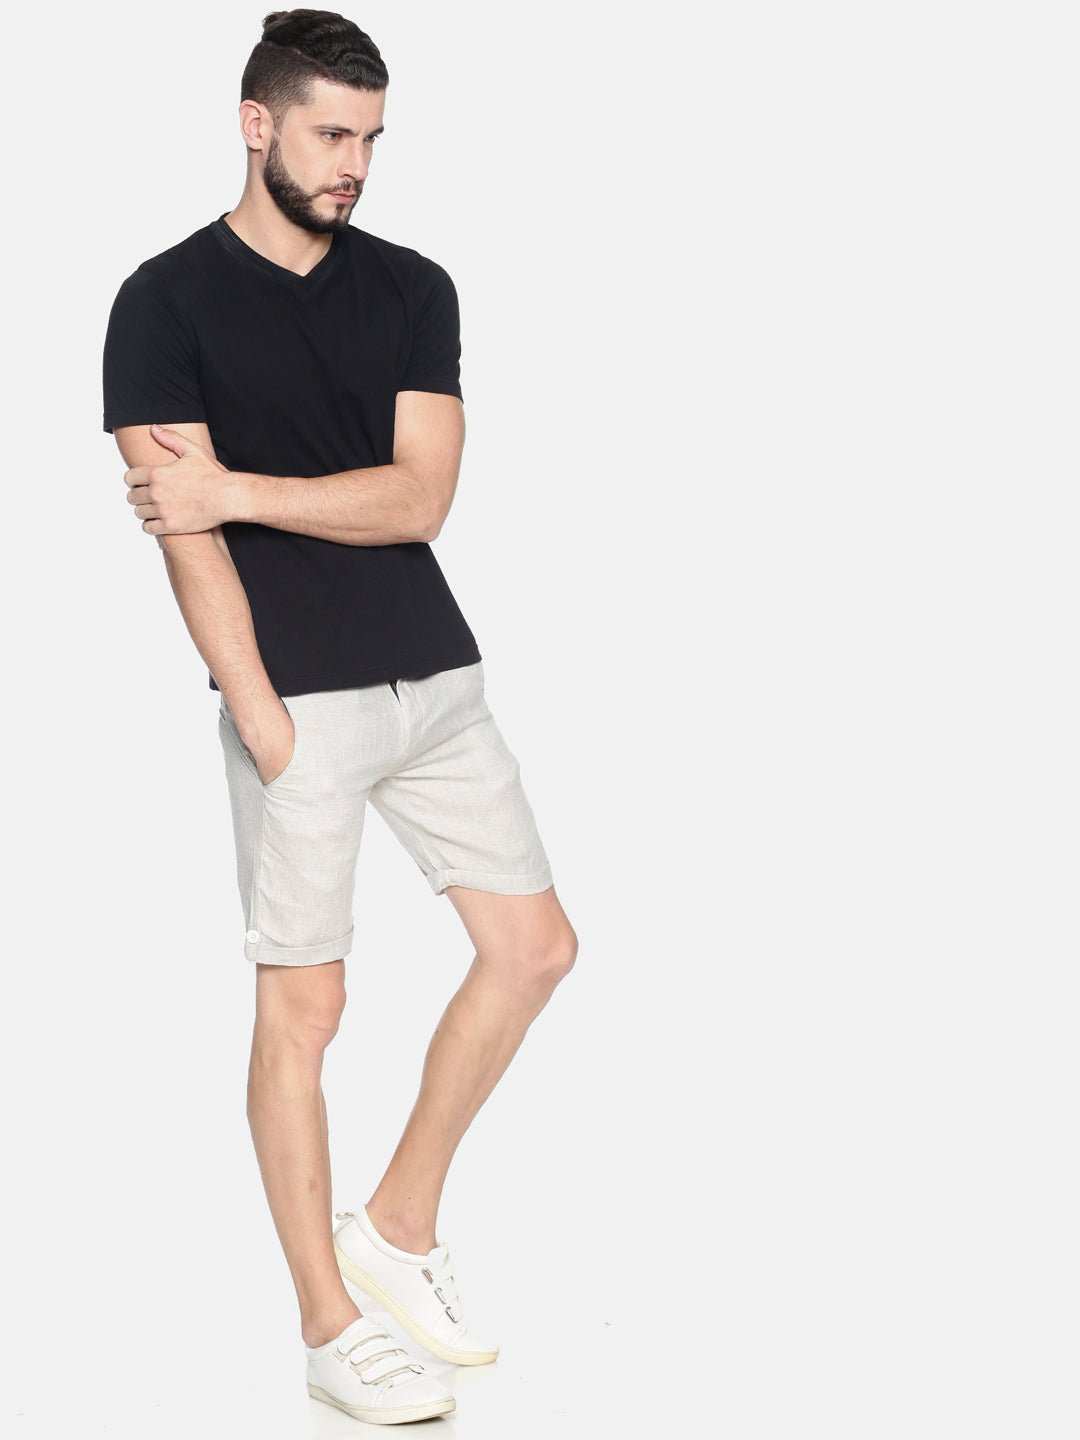 Ecentric Beige Colour Slim Fit Hemp Shorts - CBD Store India